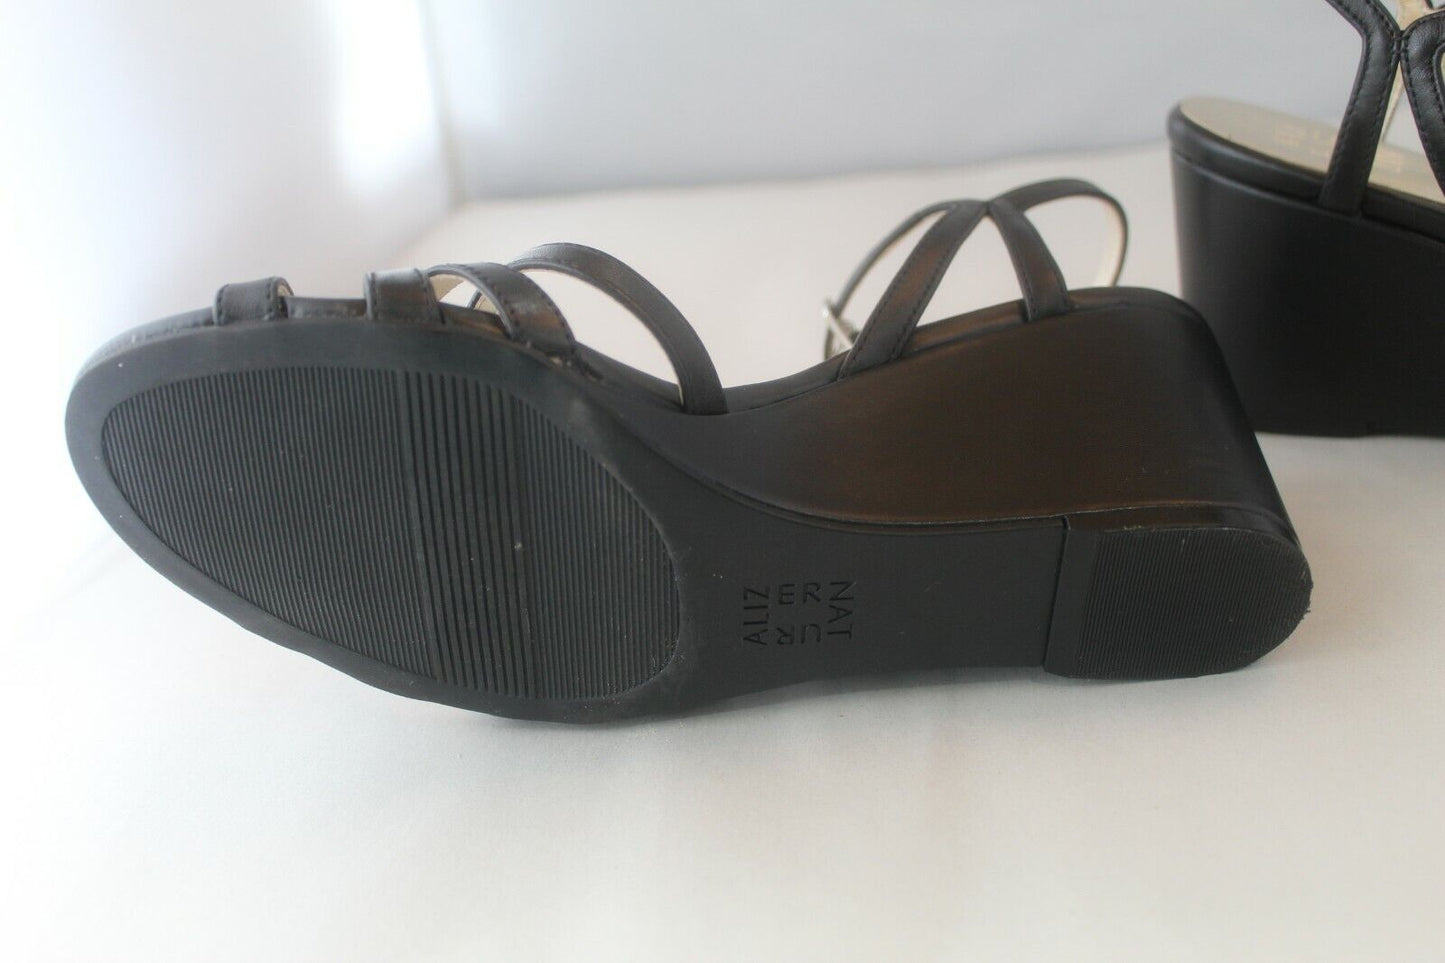 Naturalizer Women's Gio Wedge Sandal, Black Leather, Size 8.5 Medium